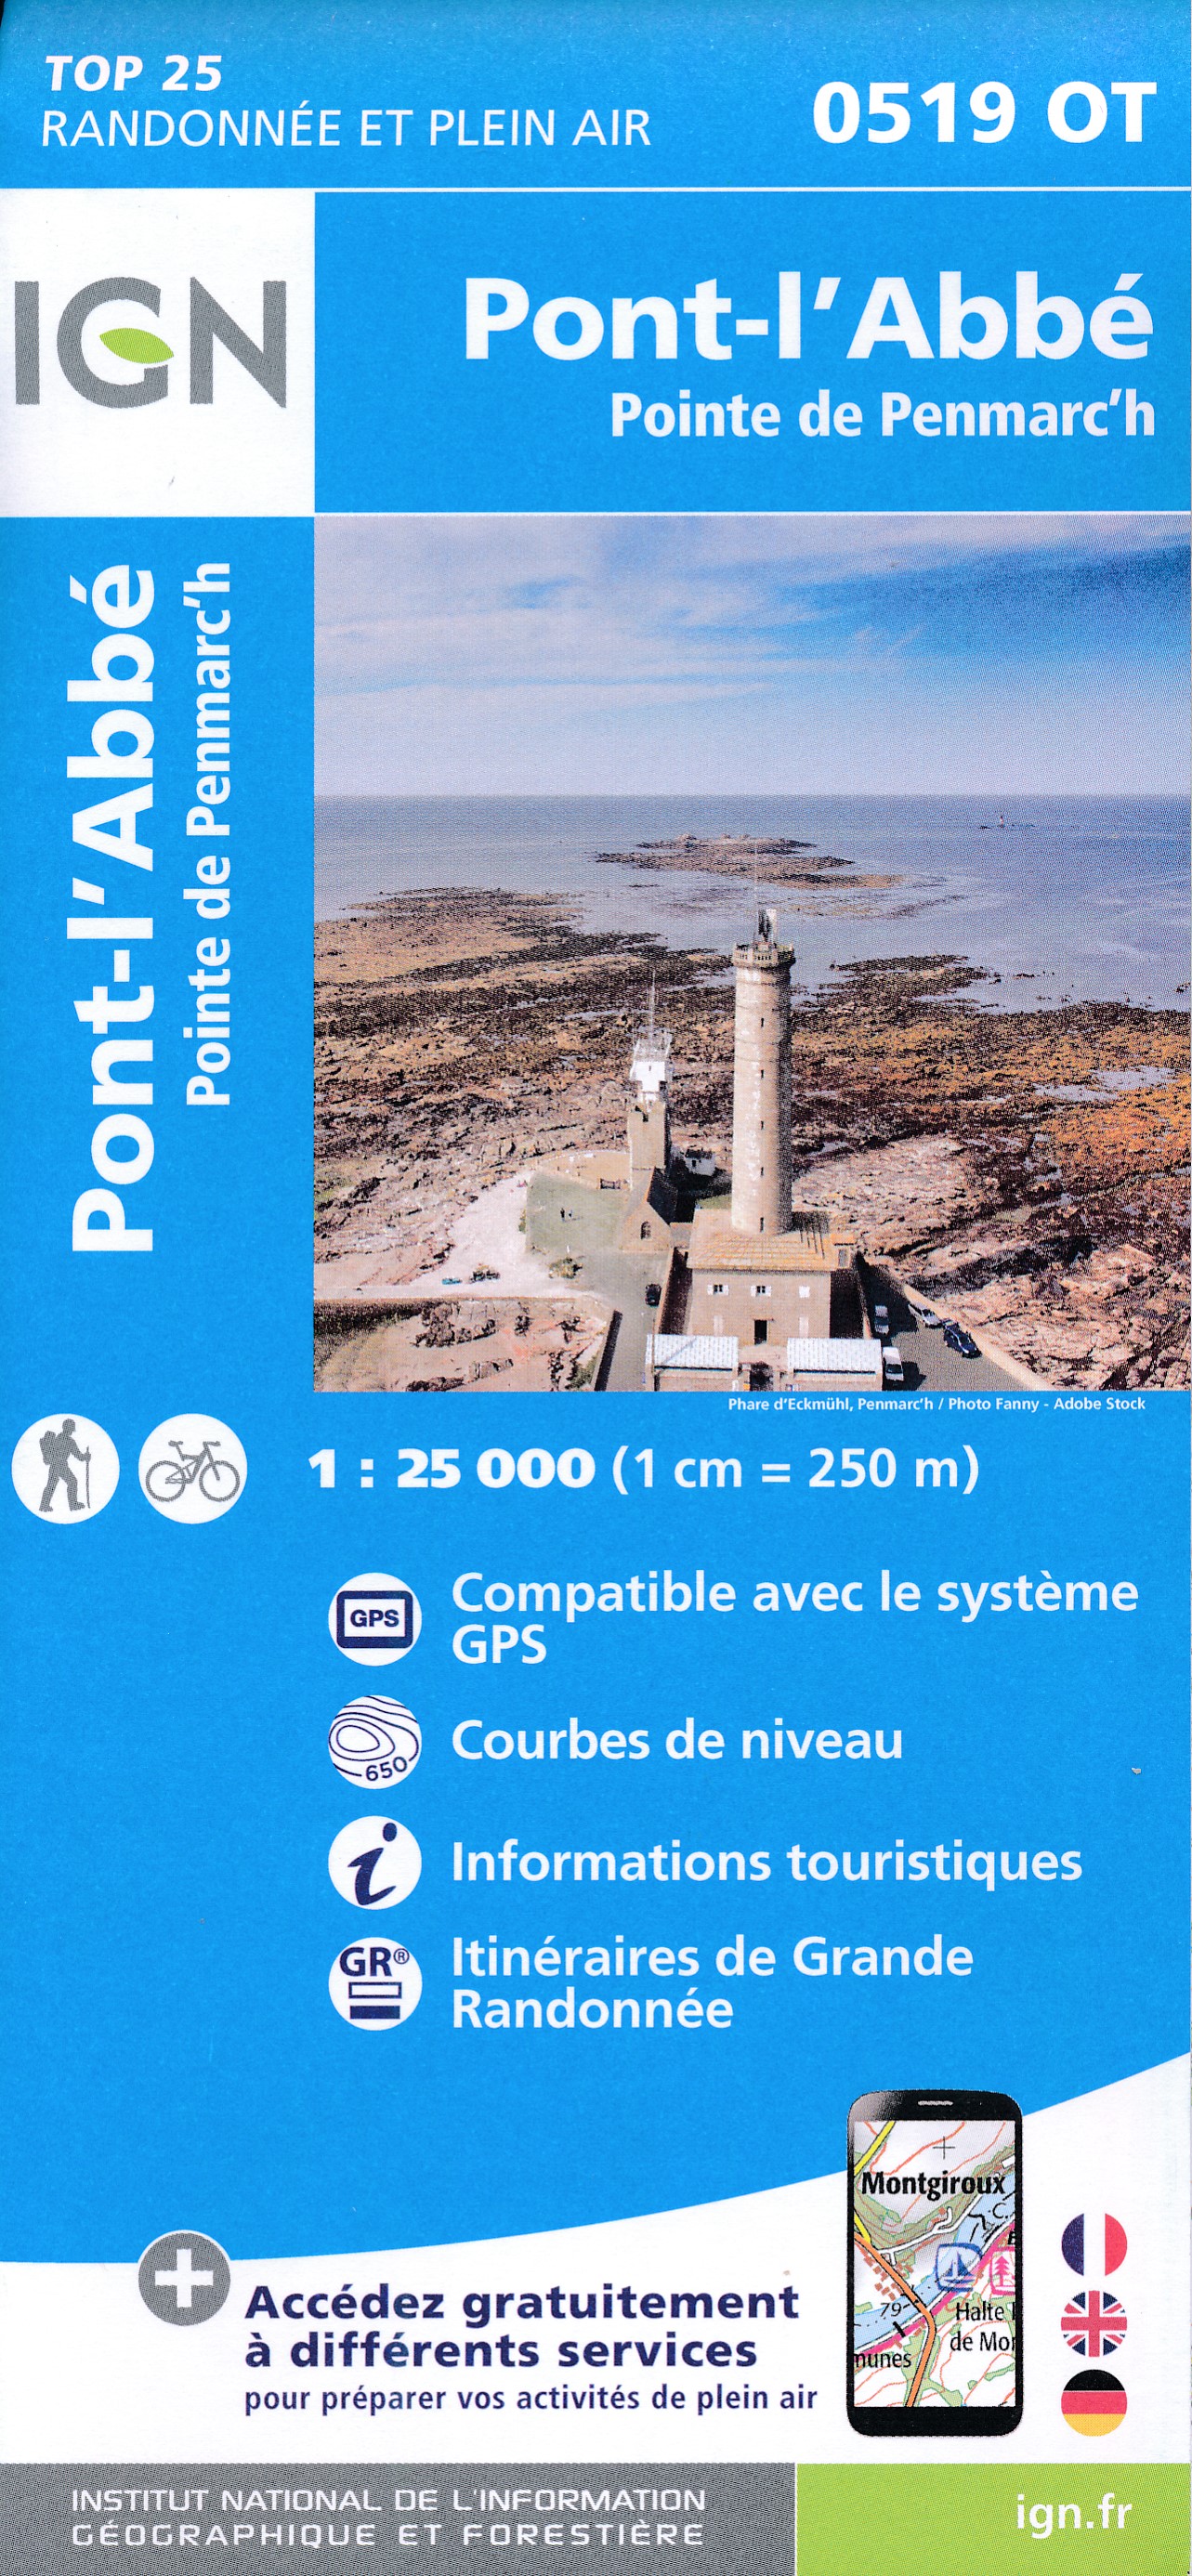 Online bestellen: Wandelkaart - Topografische kaart 0519OT Pont l Abbé, Pointe de Penmarc h, Plogastel-St.-Germain, Plonéour-Lanvern | IGN - Institut Géographique National